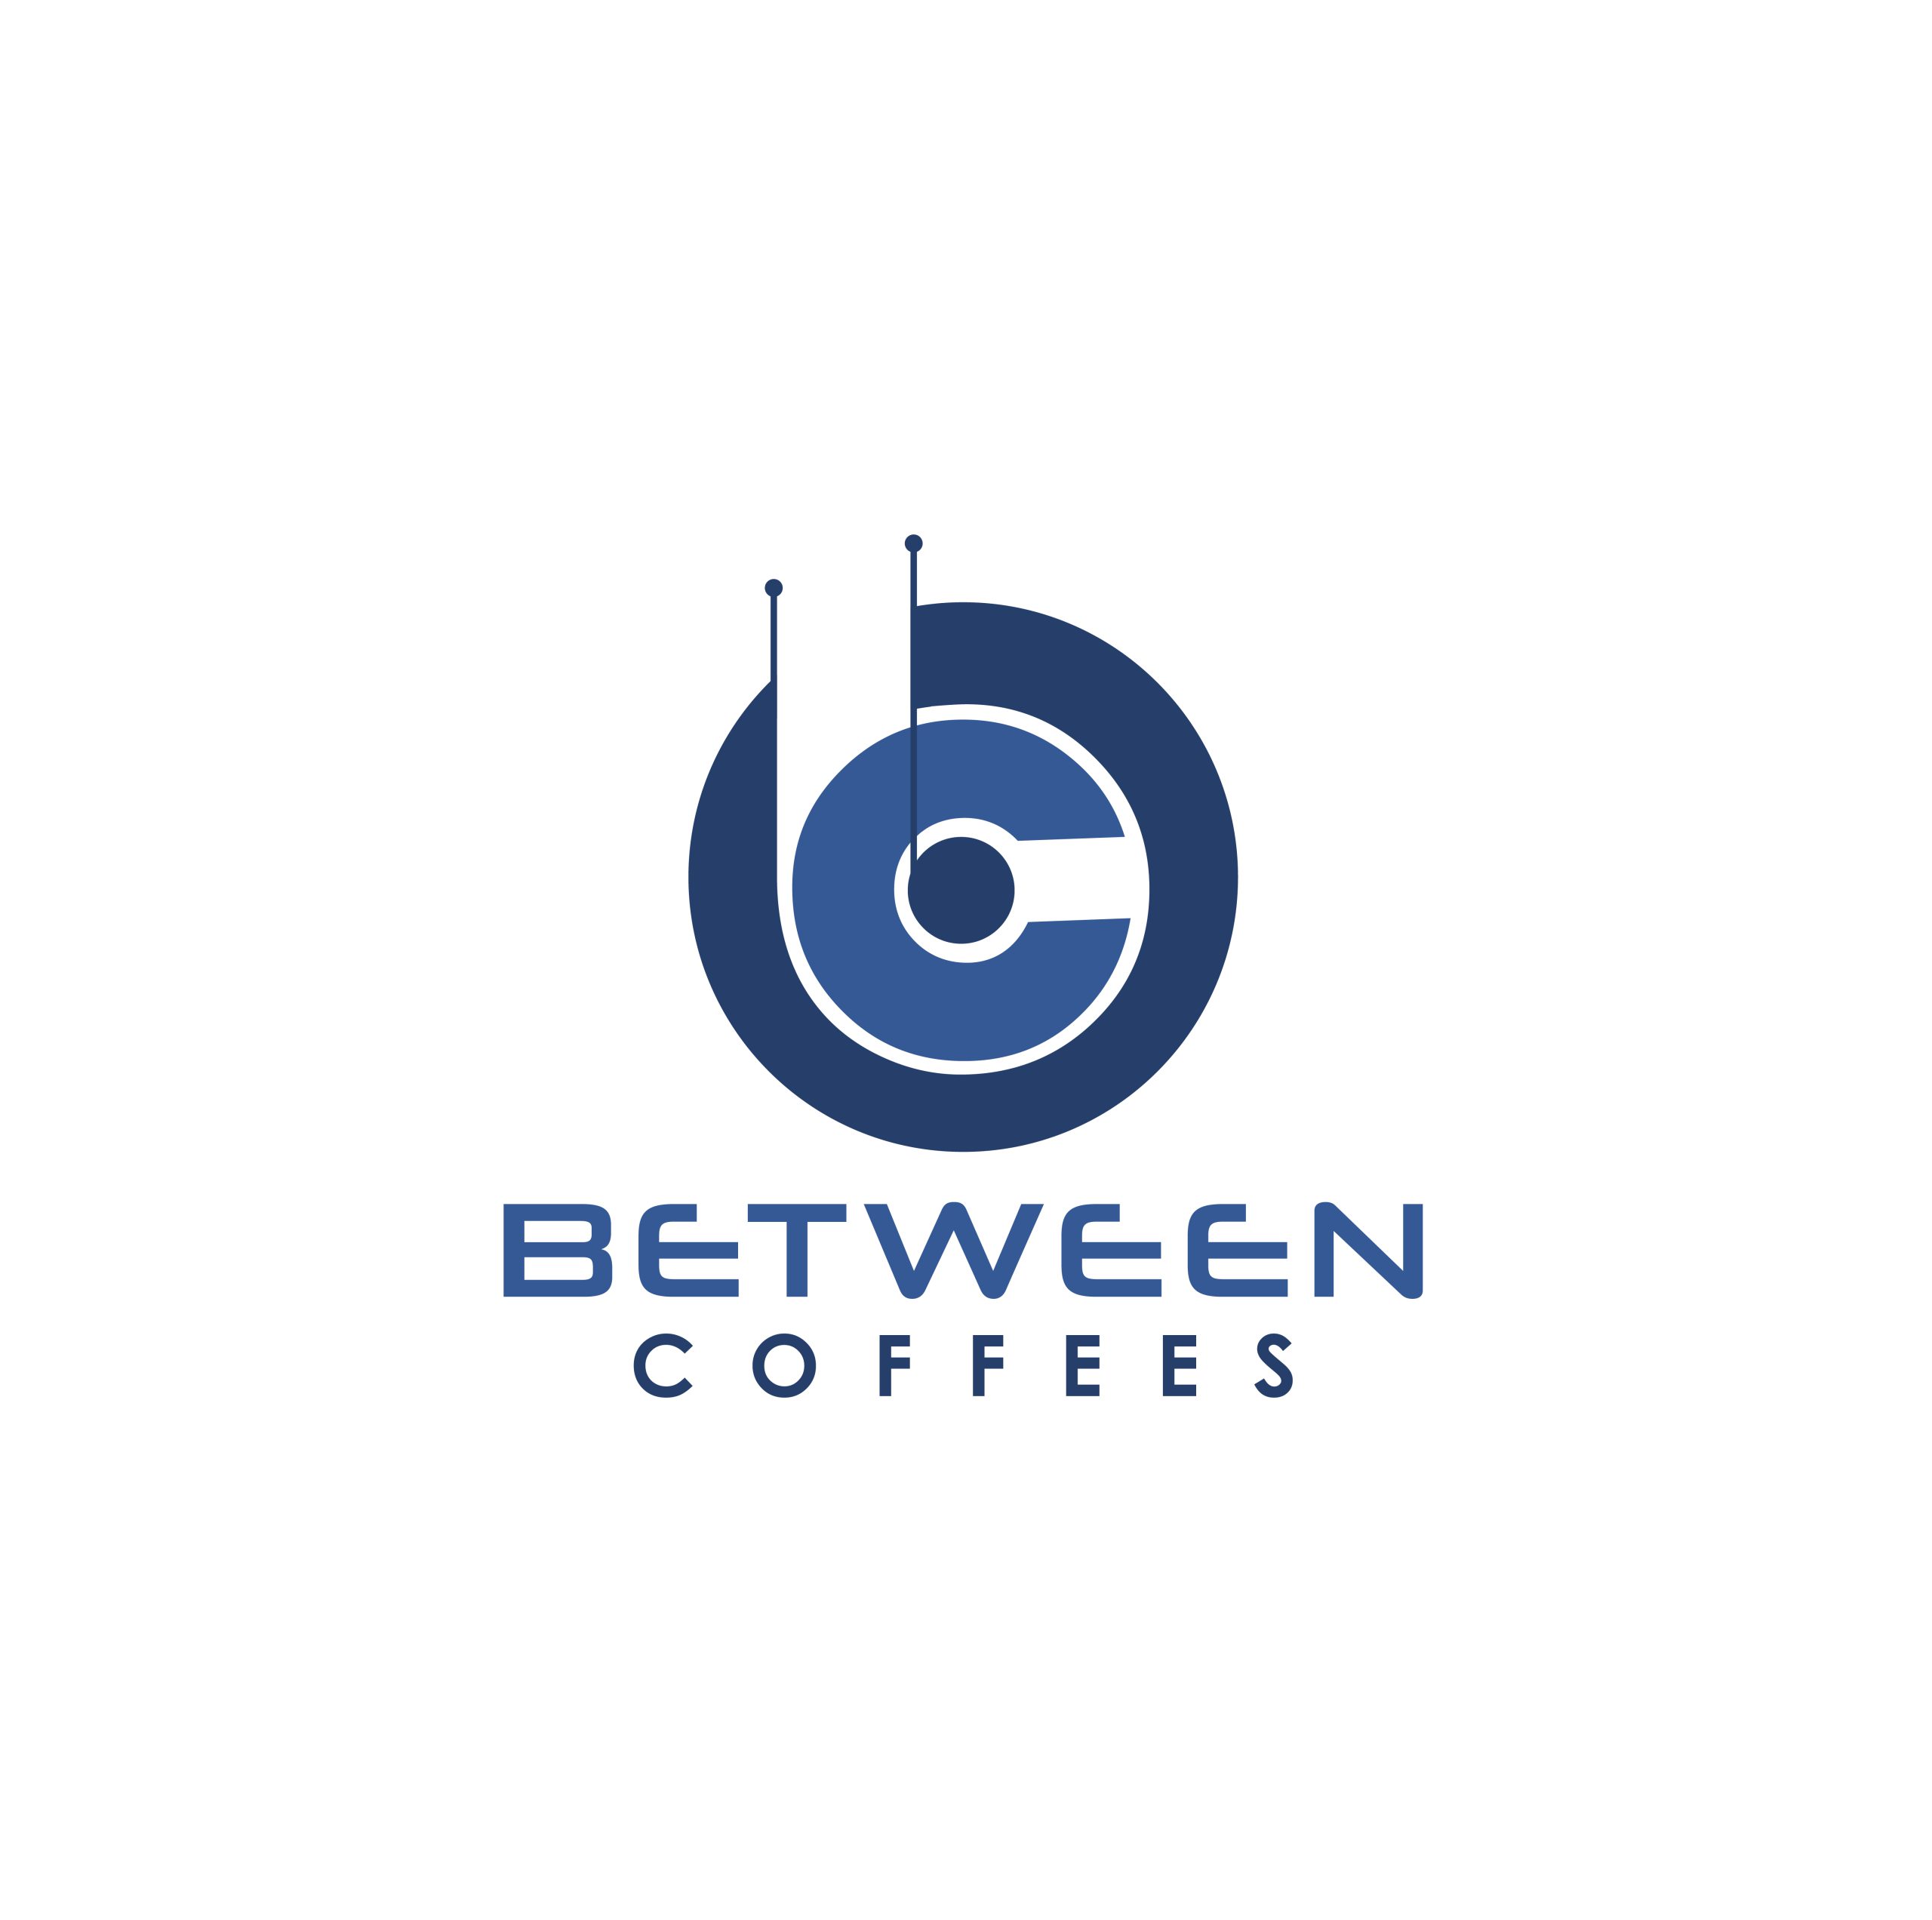 Between Coffees